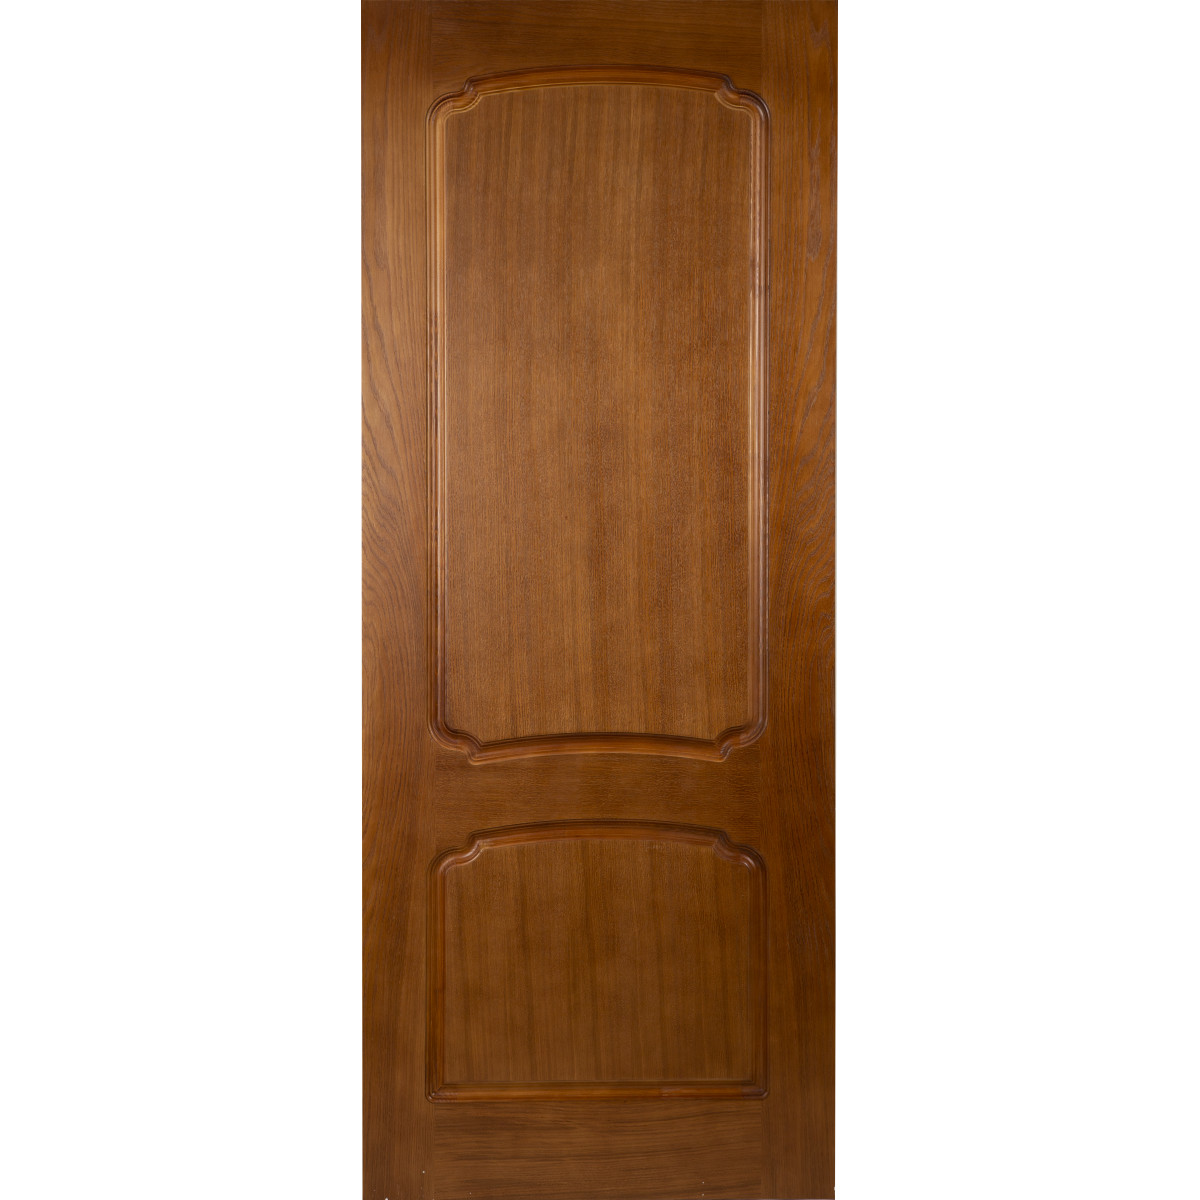 Дверь межкомнатная глухая Helly 90x200 см, шпон, цвет тонированный дуб